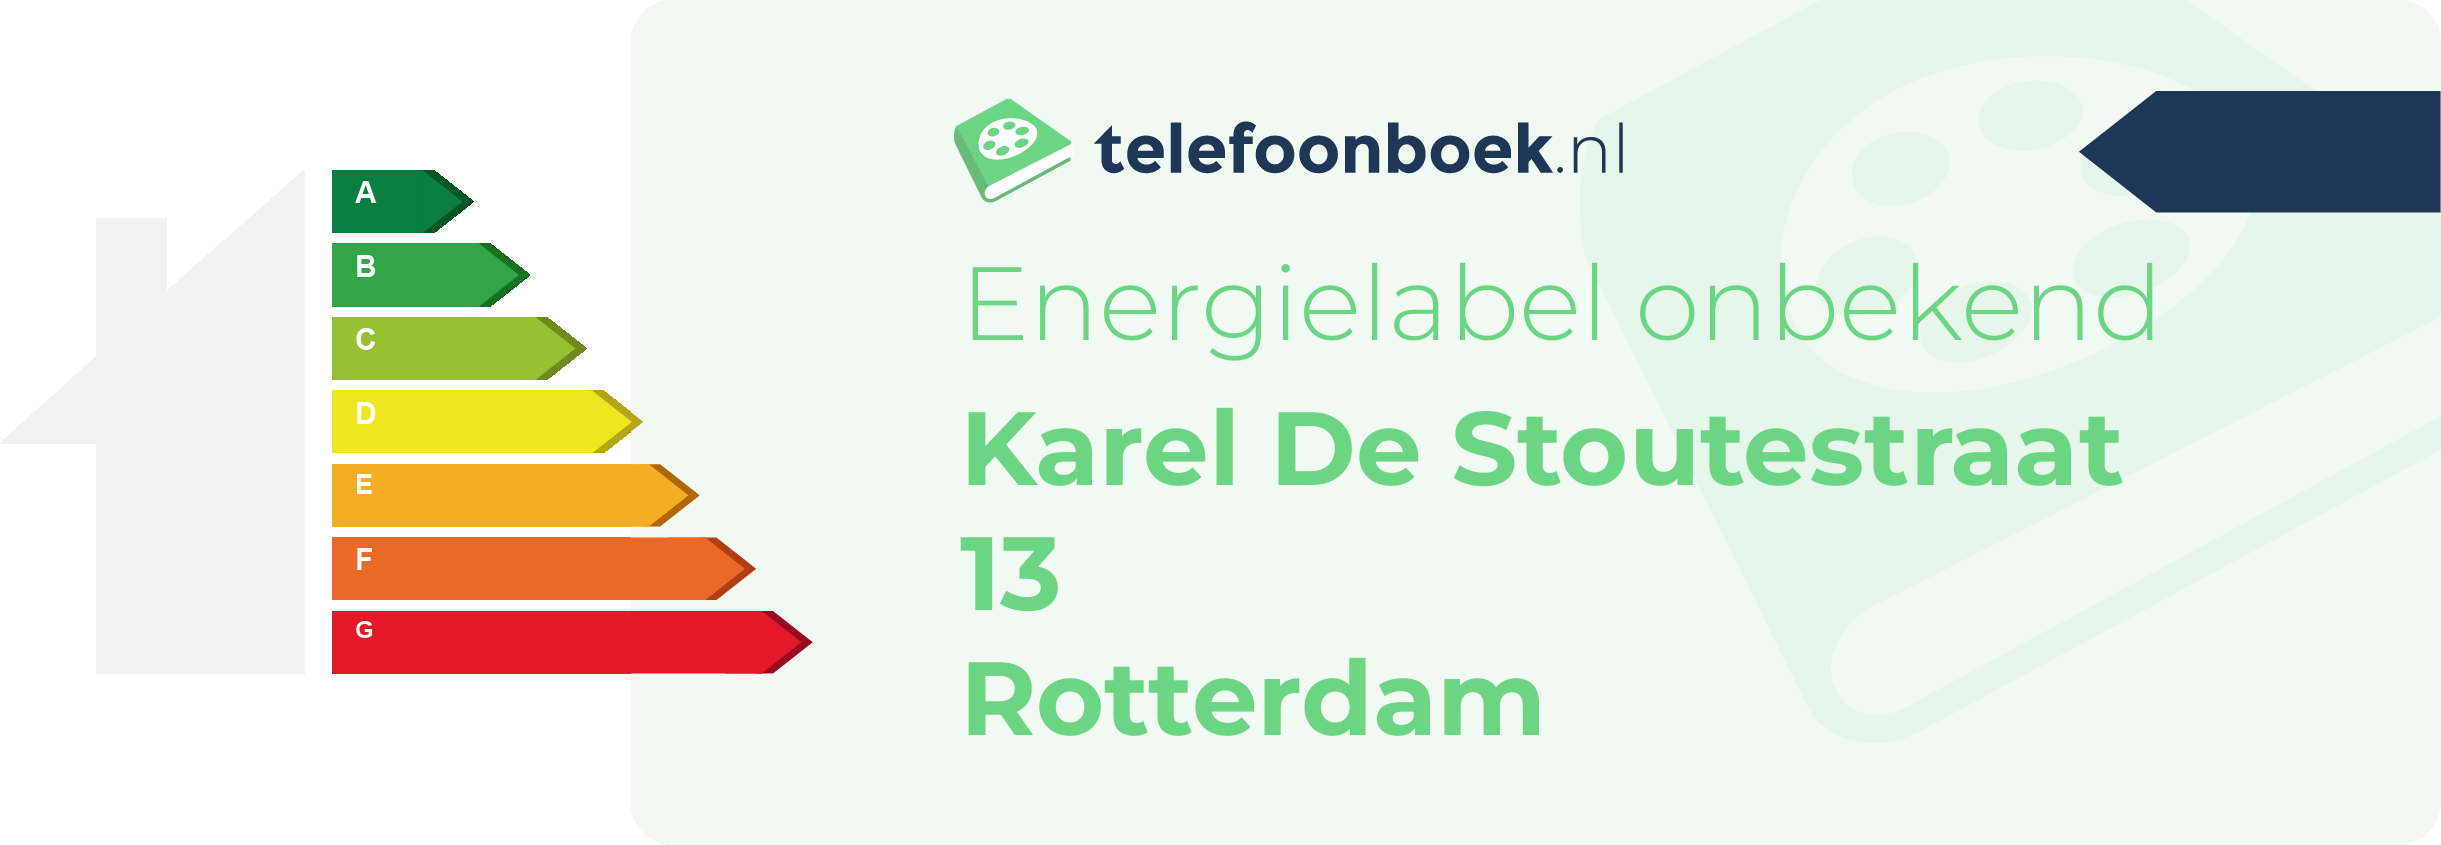 Energielabel Karel De Stoutestraat 13 Rotterdam